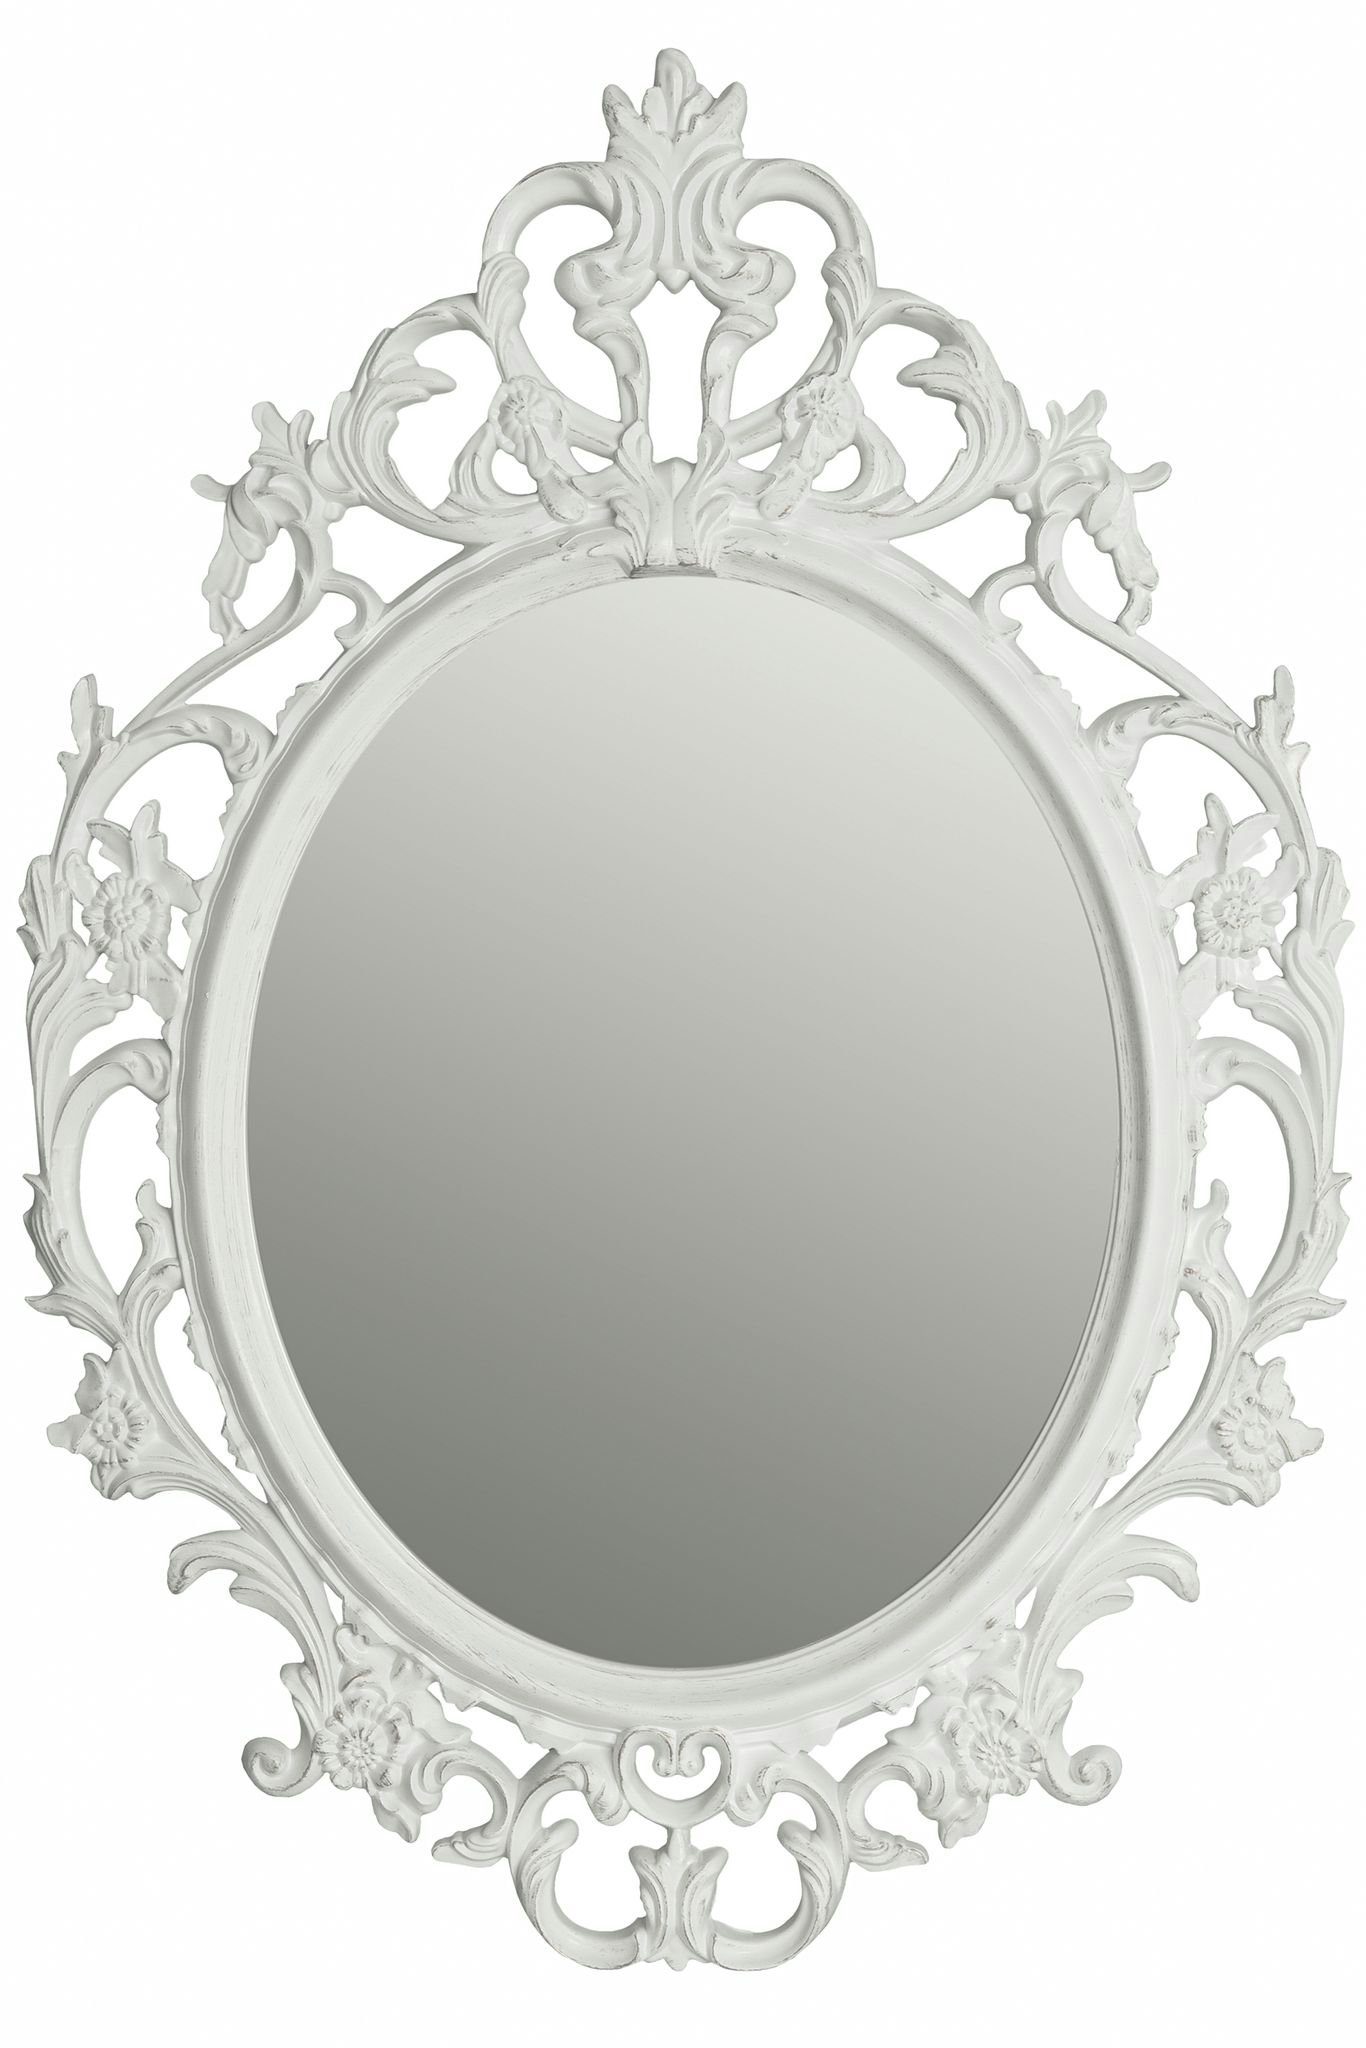 Spiegel Barockspiegel Badspiegel Oval Spiegel Wandspiegel elbmöbel barock Barockspiegel, weiß oval Barock Wandspiegel weiß